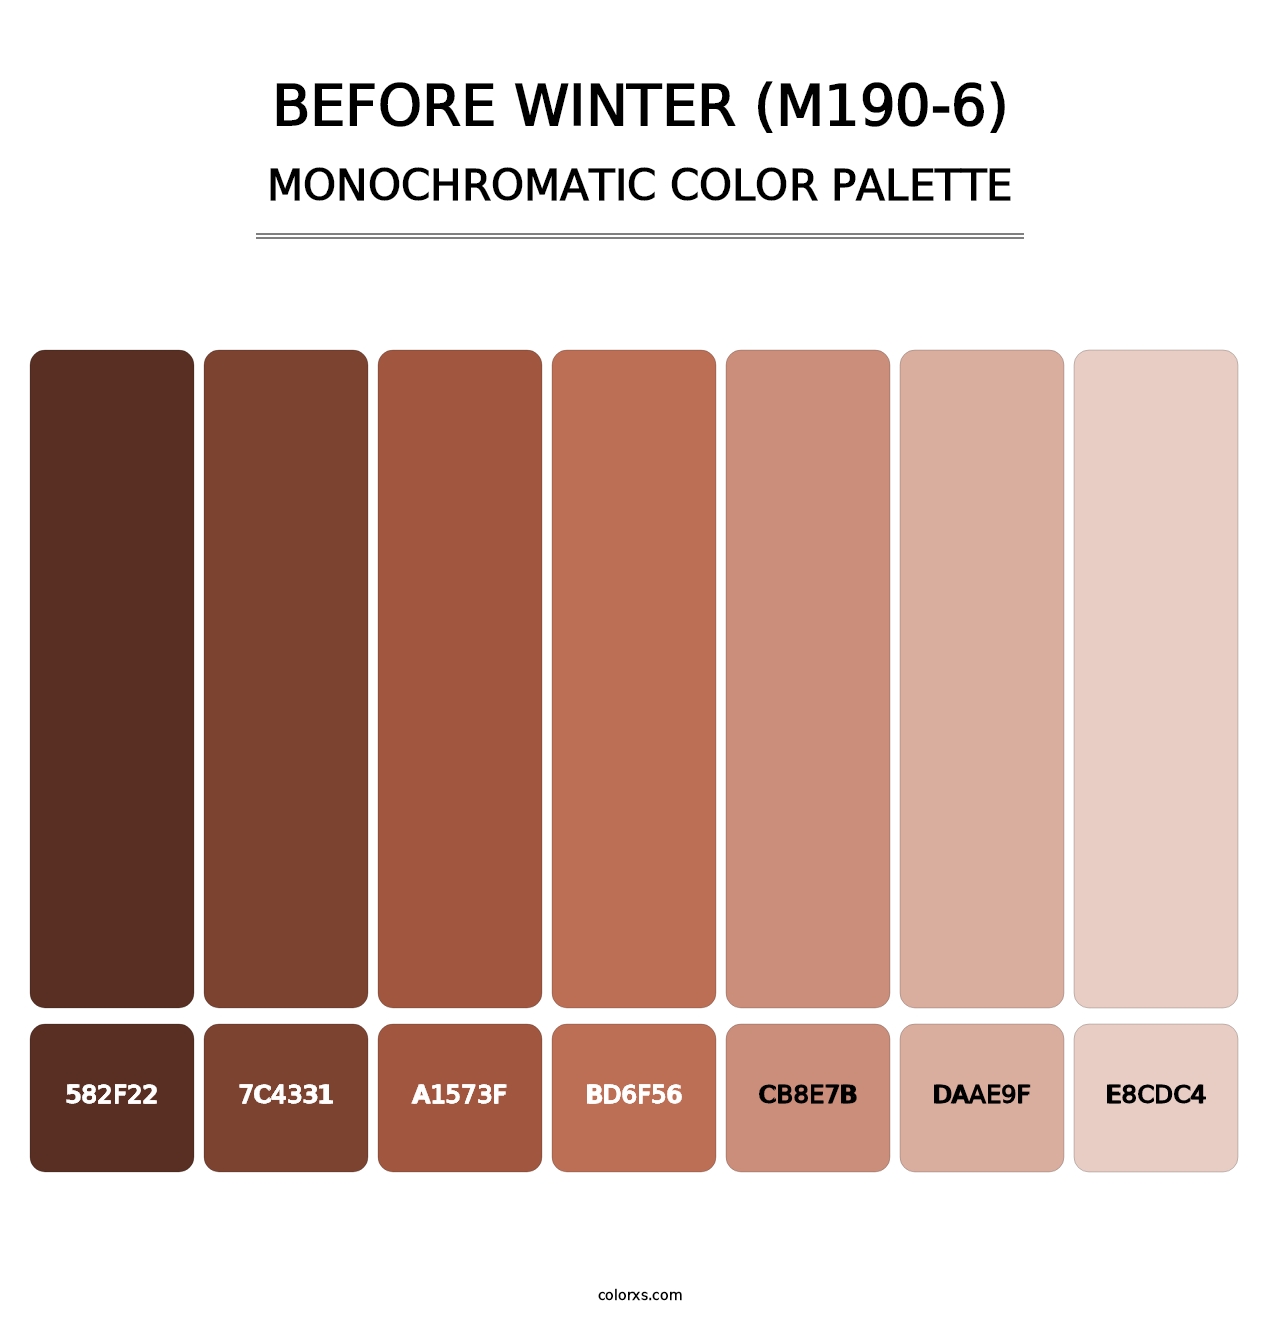 Before Winter (M190-6) - Monochromatic Color Palette